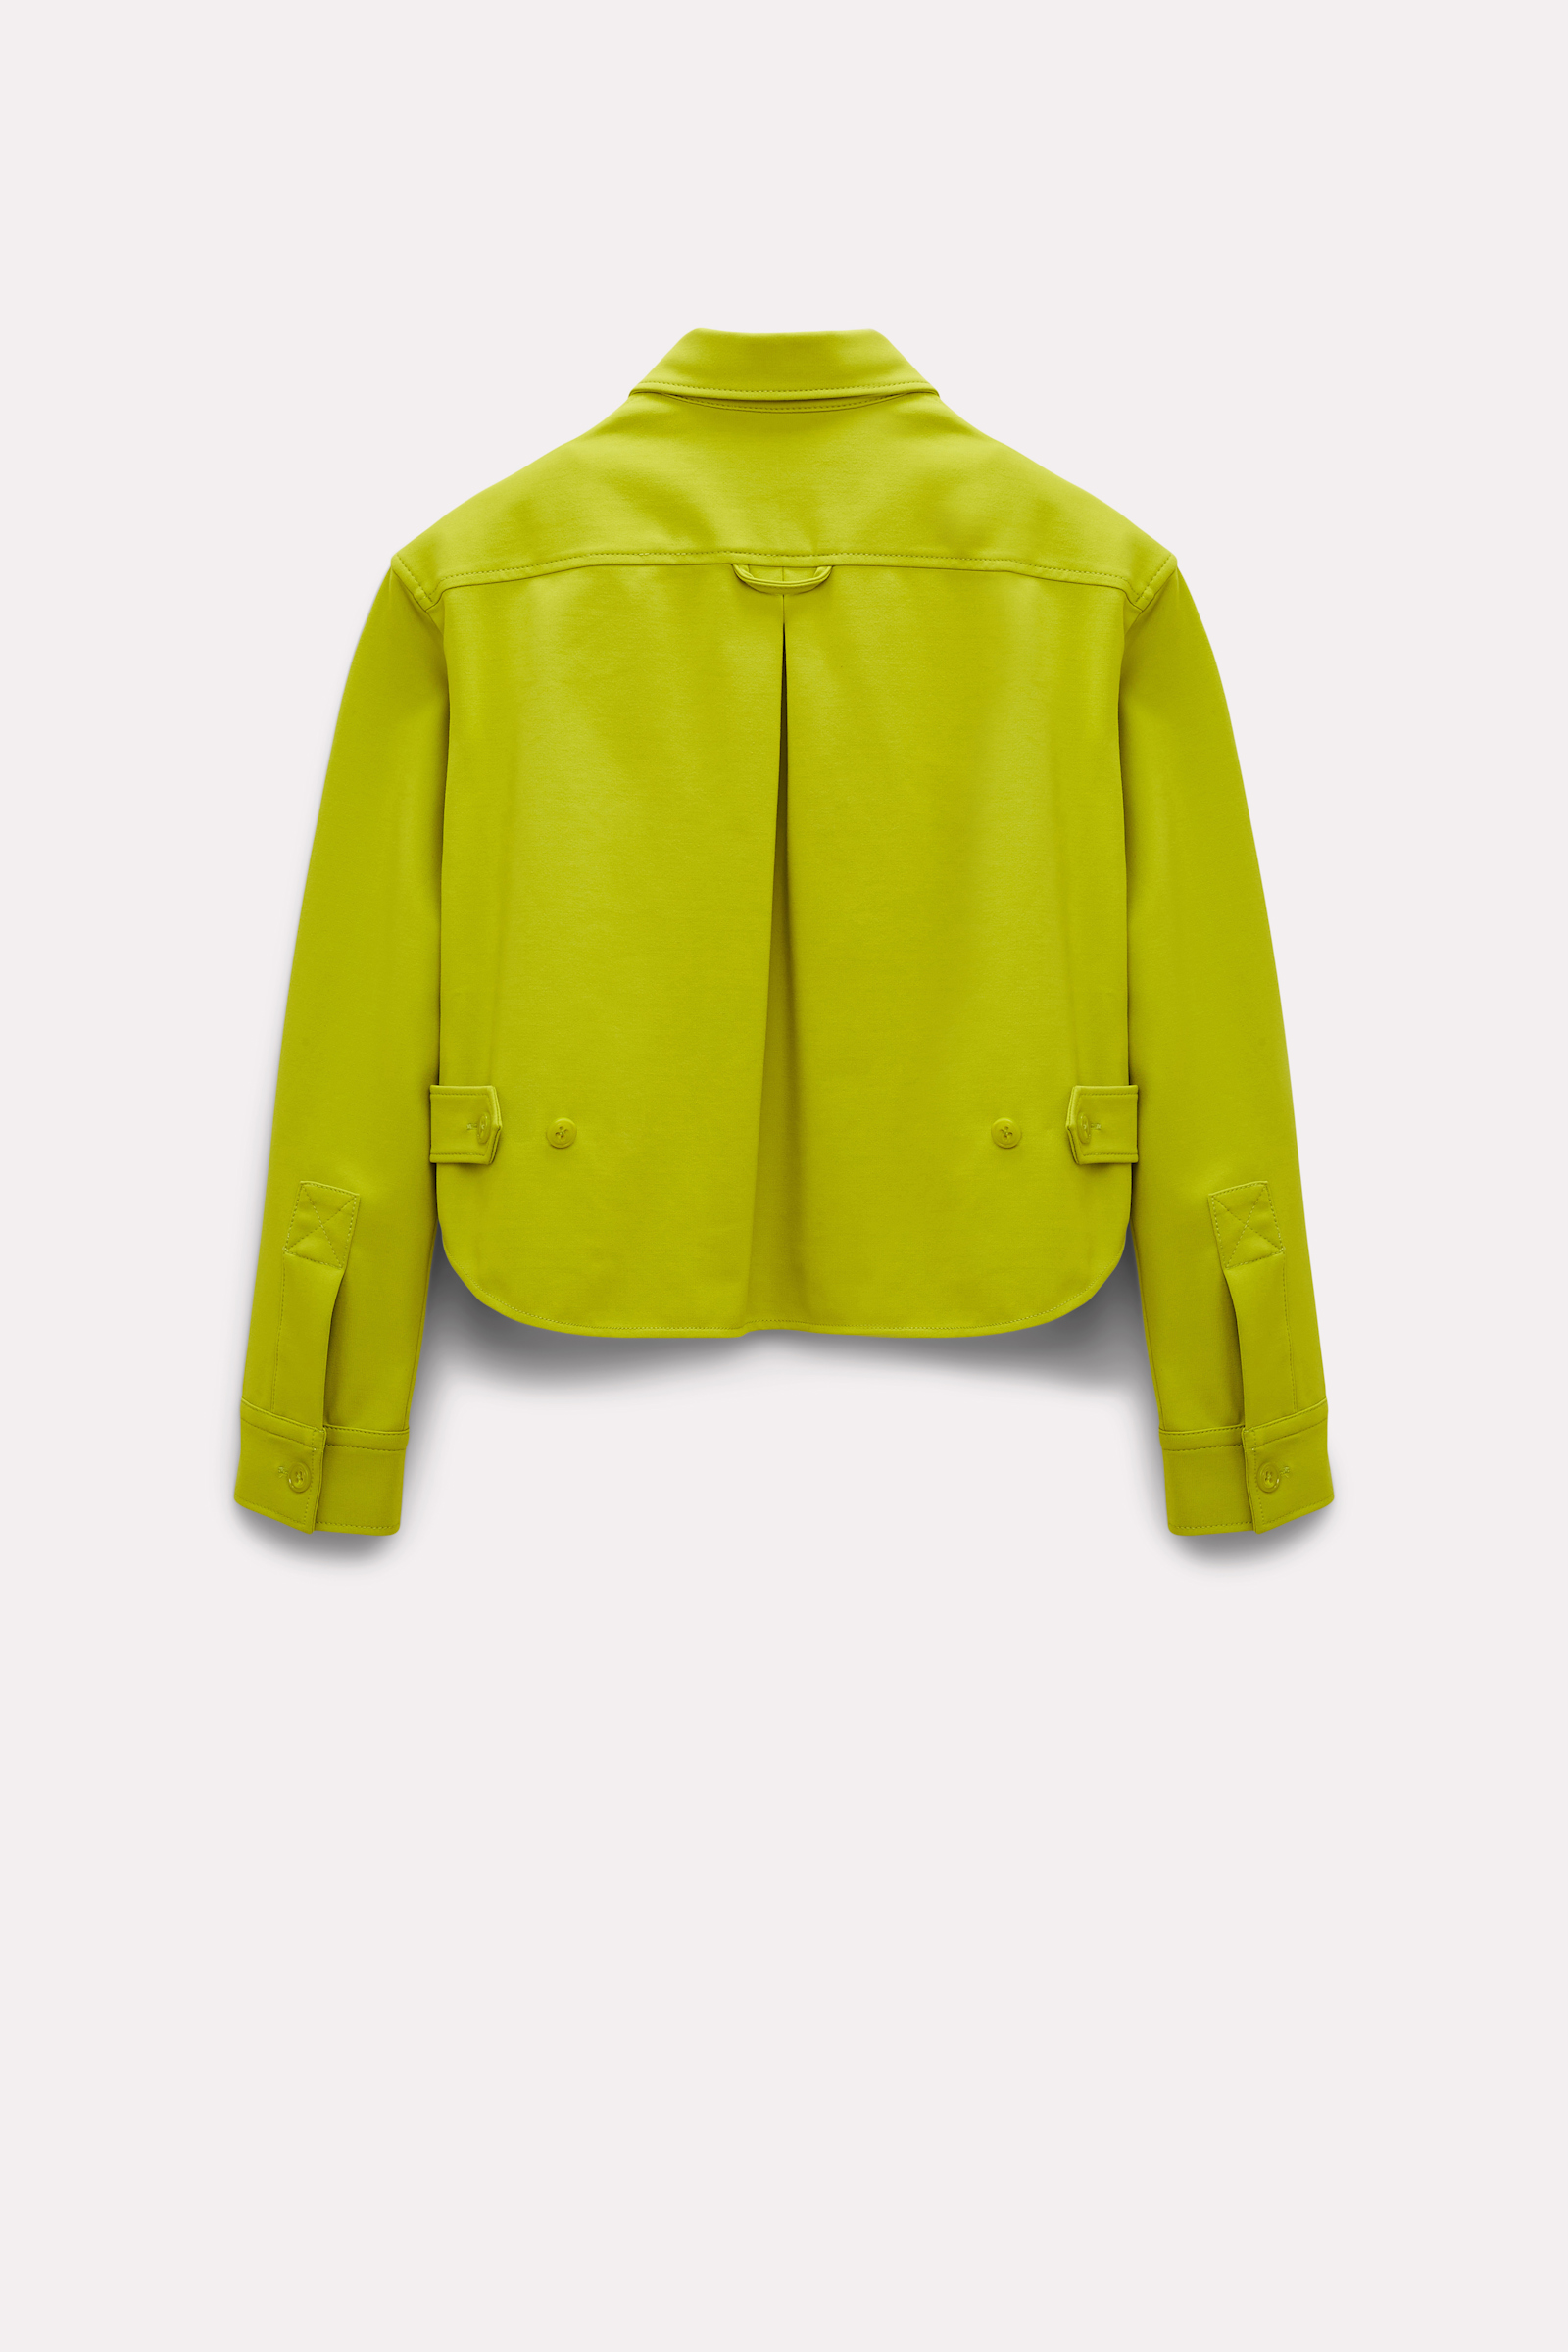 Dorothee Schumacher Shirt-style jacket in punto milano acid green